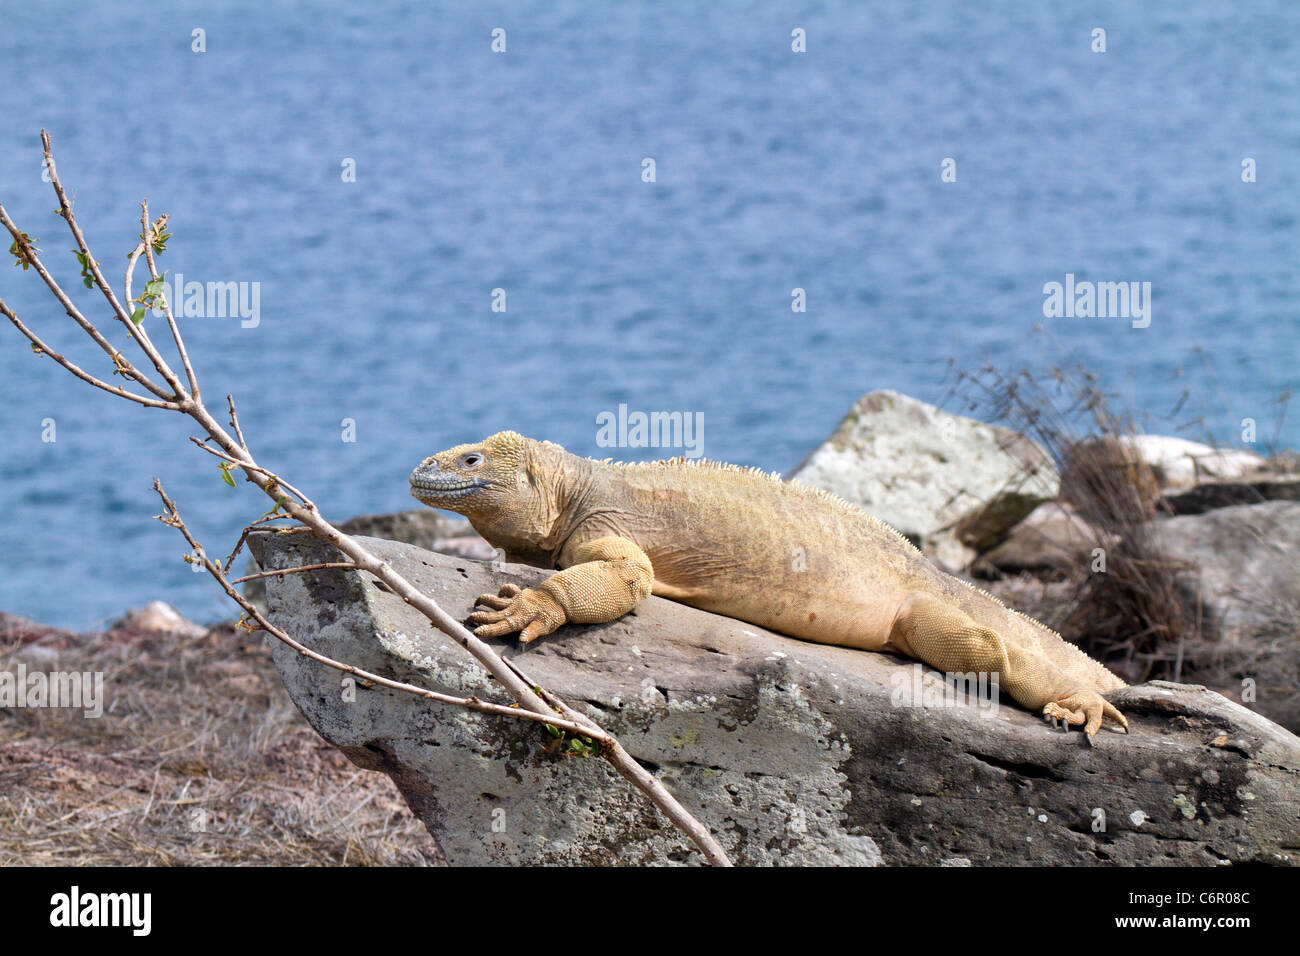 Land iguana sunning itself on a rock at Santa Fe Island, Galapagos Islands Stock Photo